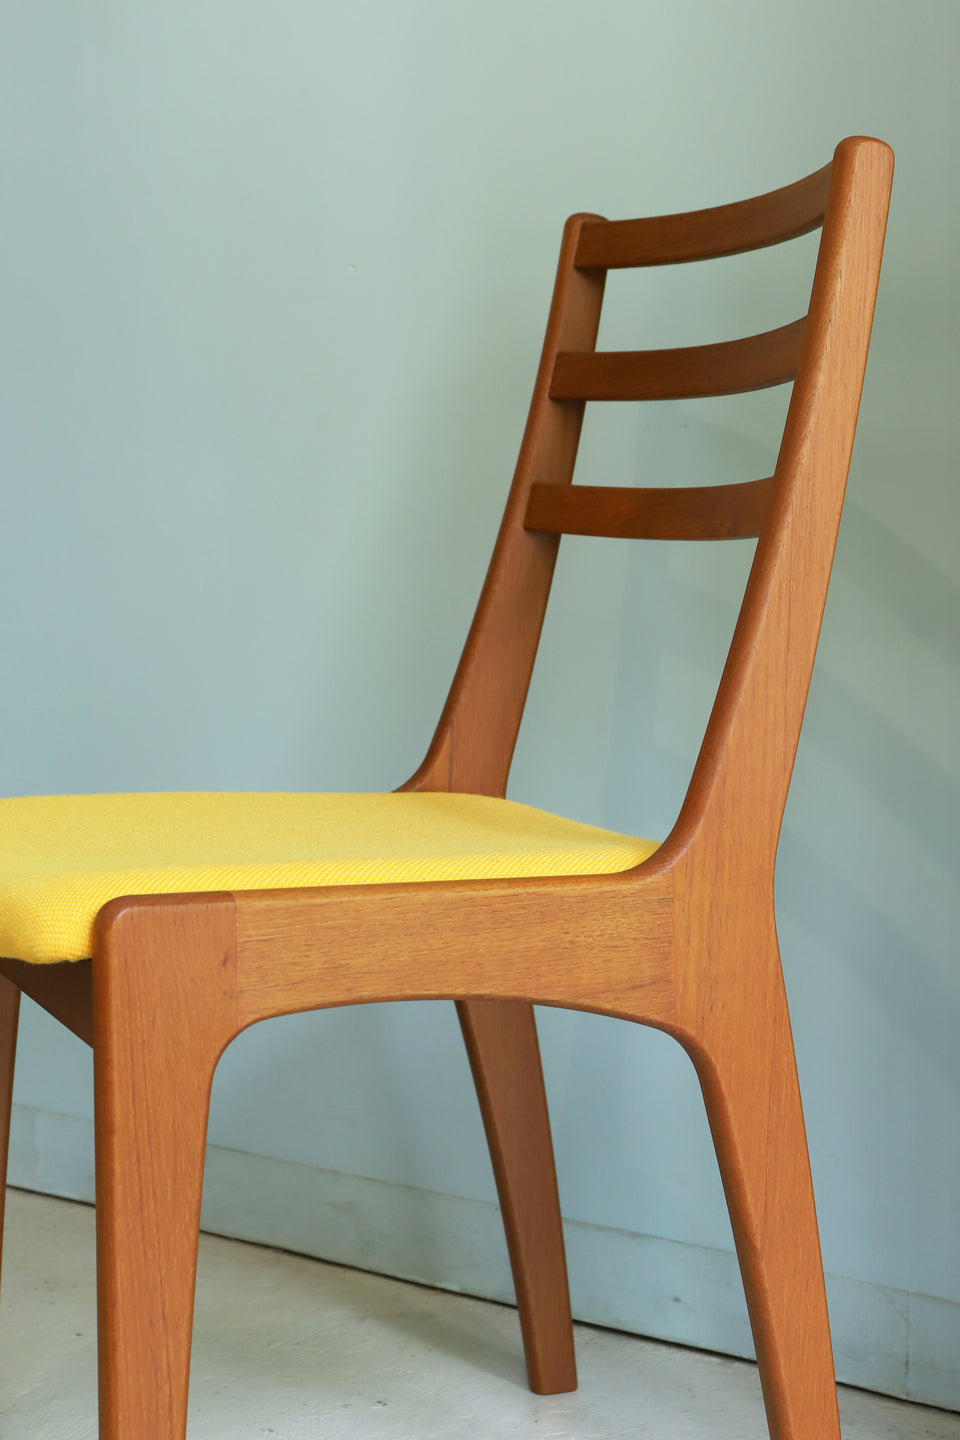 Vintage Rudder Back Dining Chair Teakwood/ヴィンテージ ダイニングチェア ラダーバック チーク材 北欧デザイン